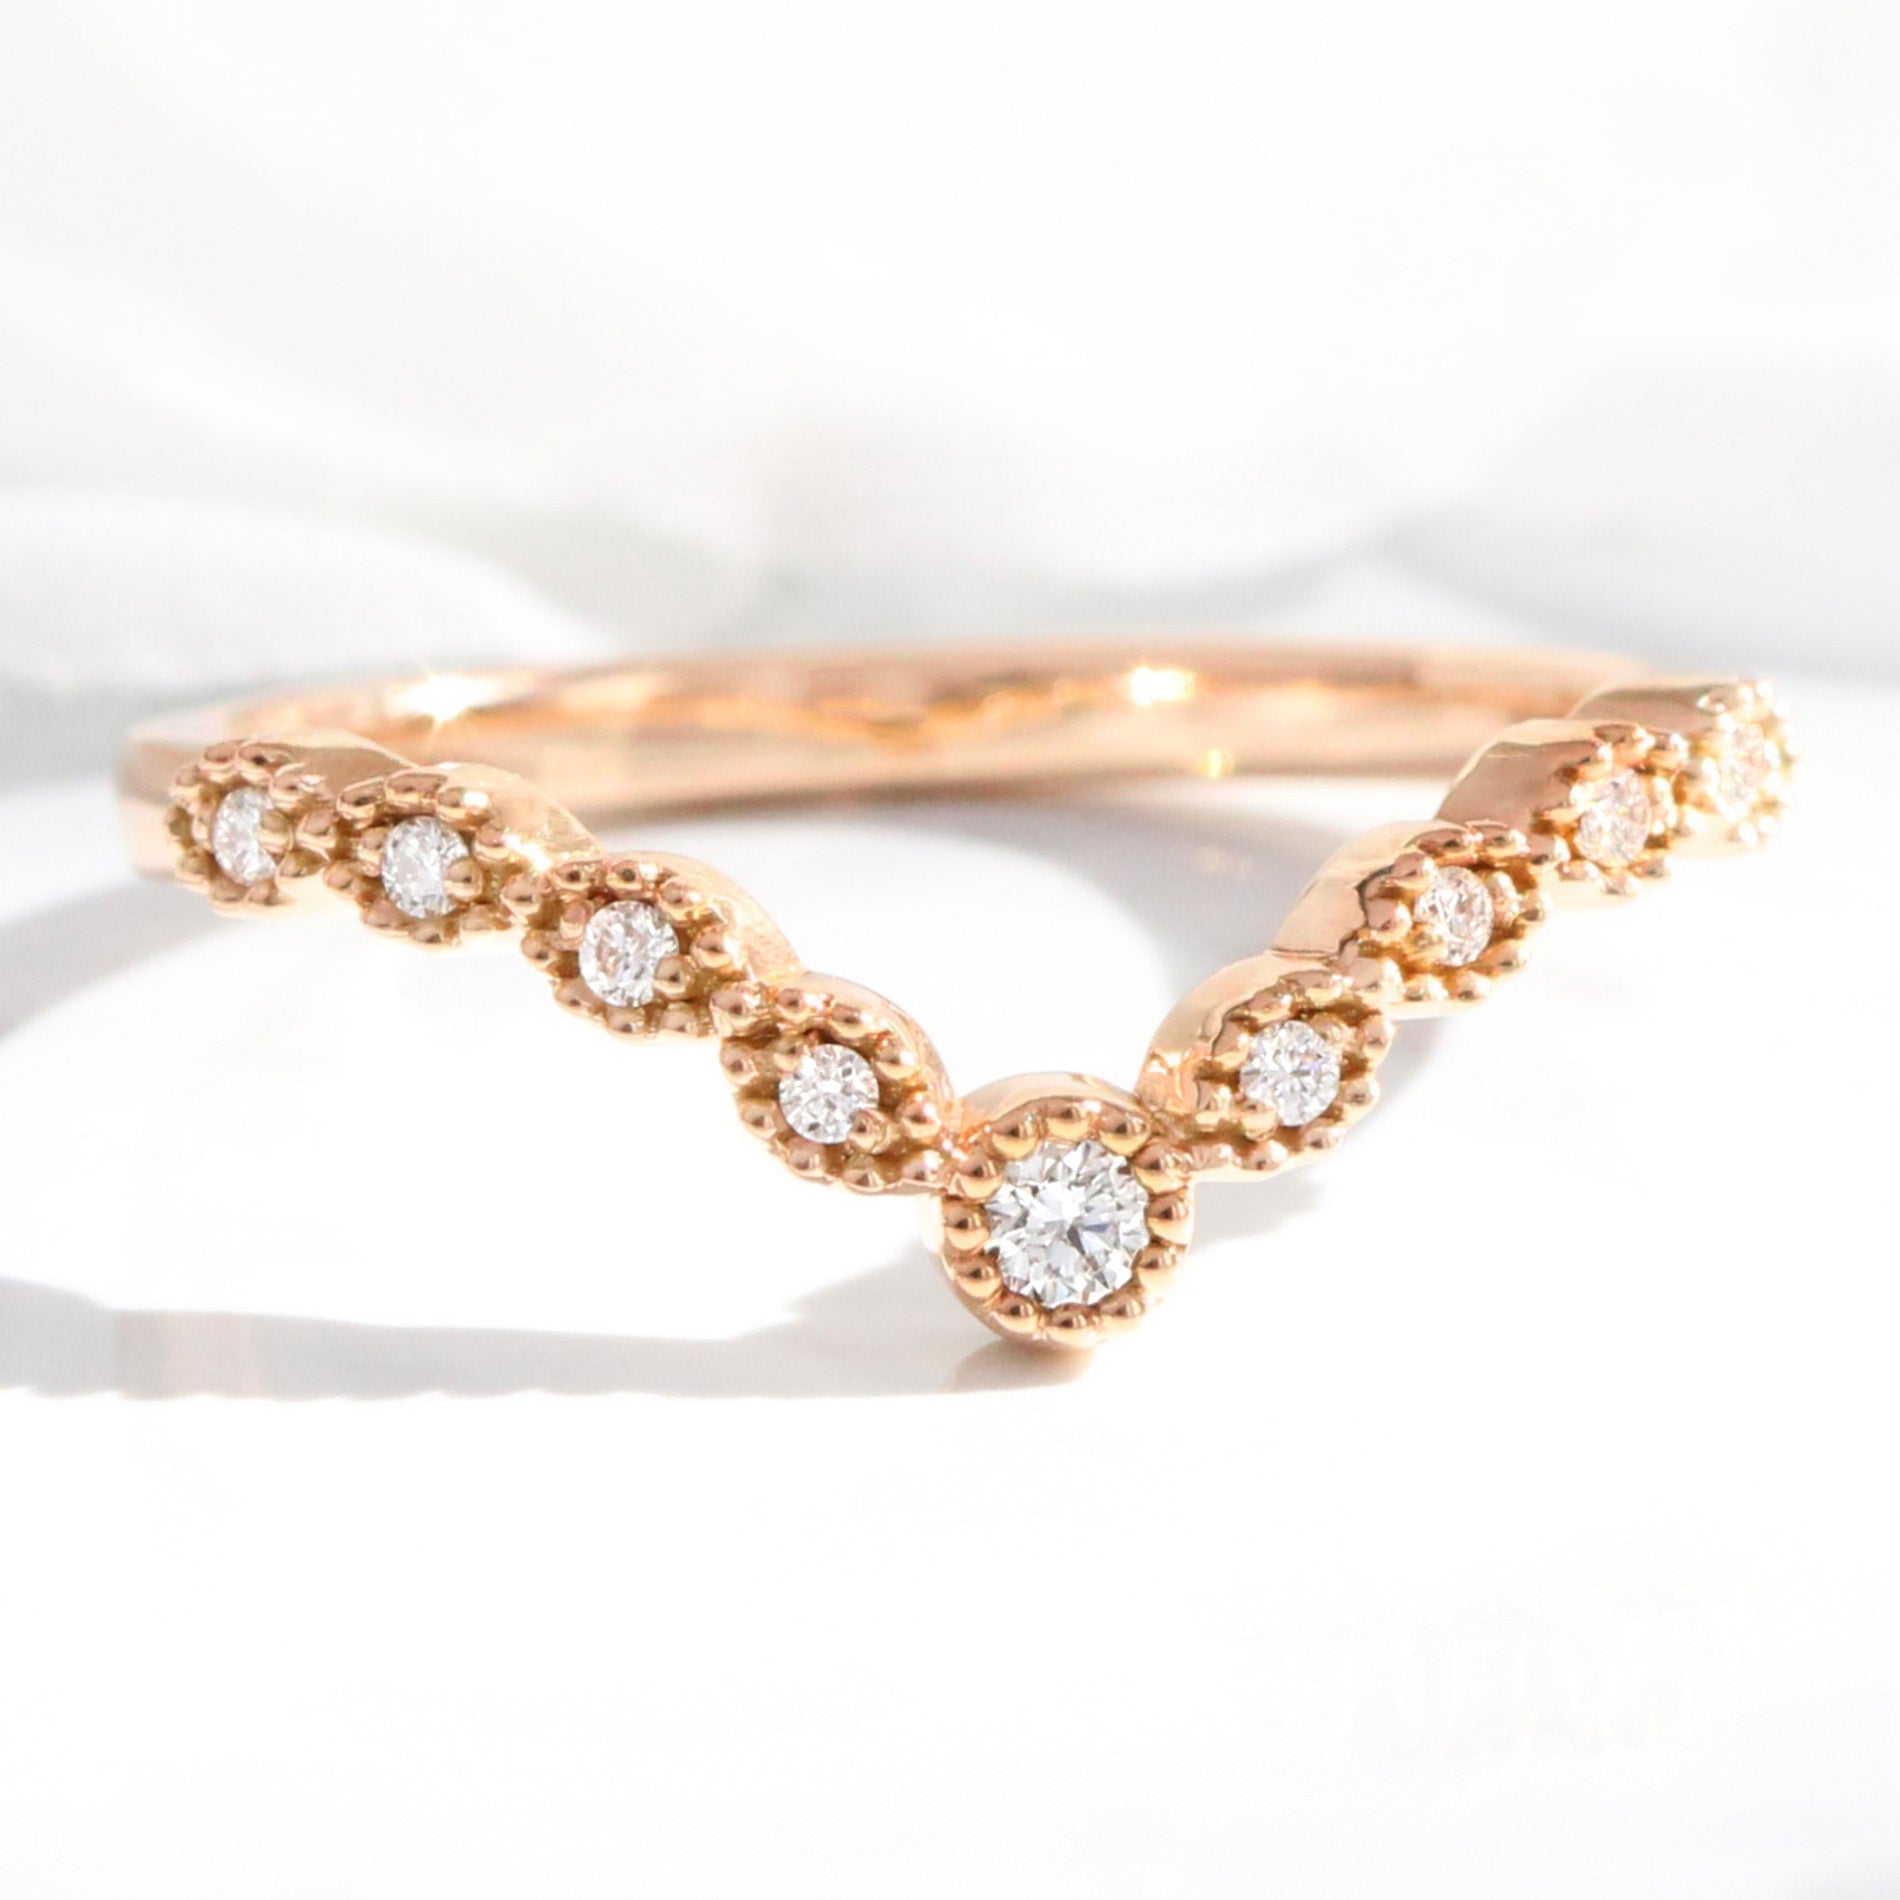 Milgrain Diamond Wedding Ring Rose Gold V Shaped Curved Band La More Design Jewelry